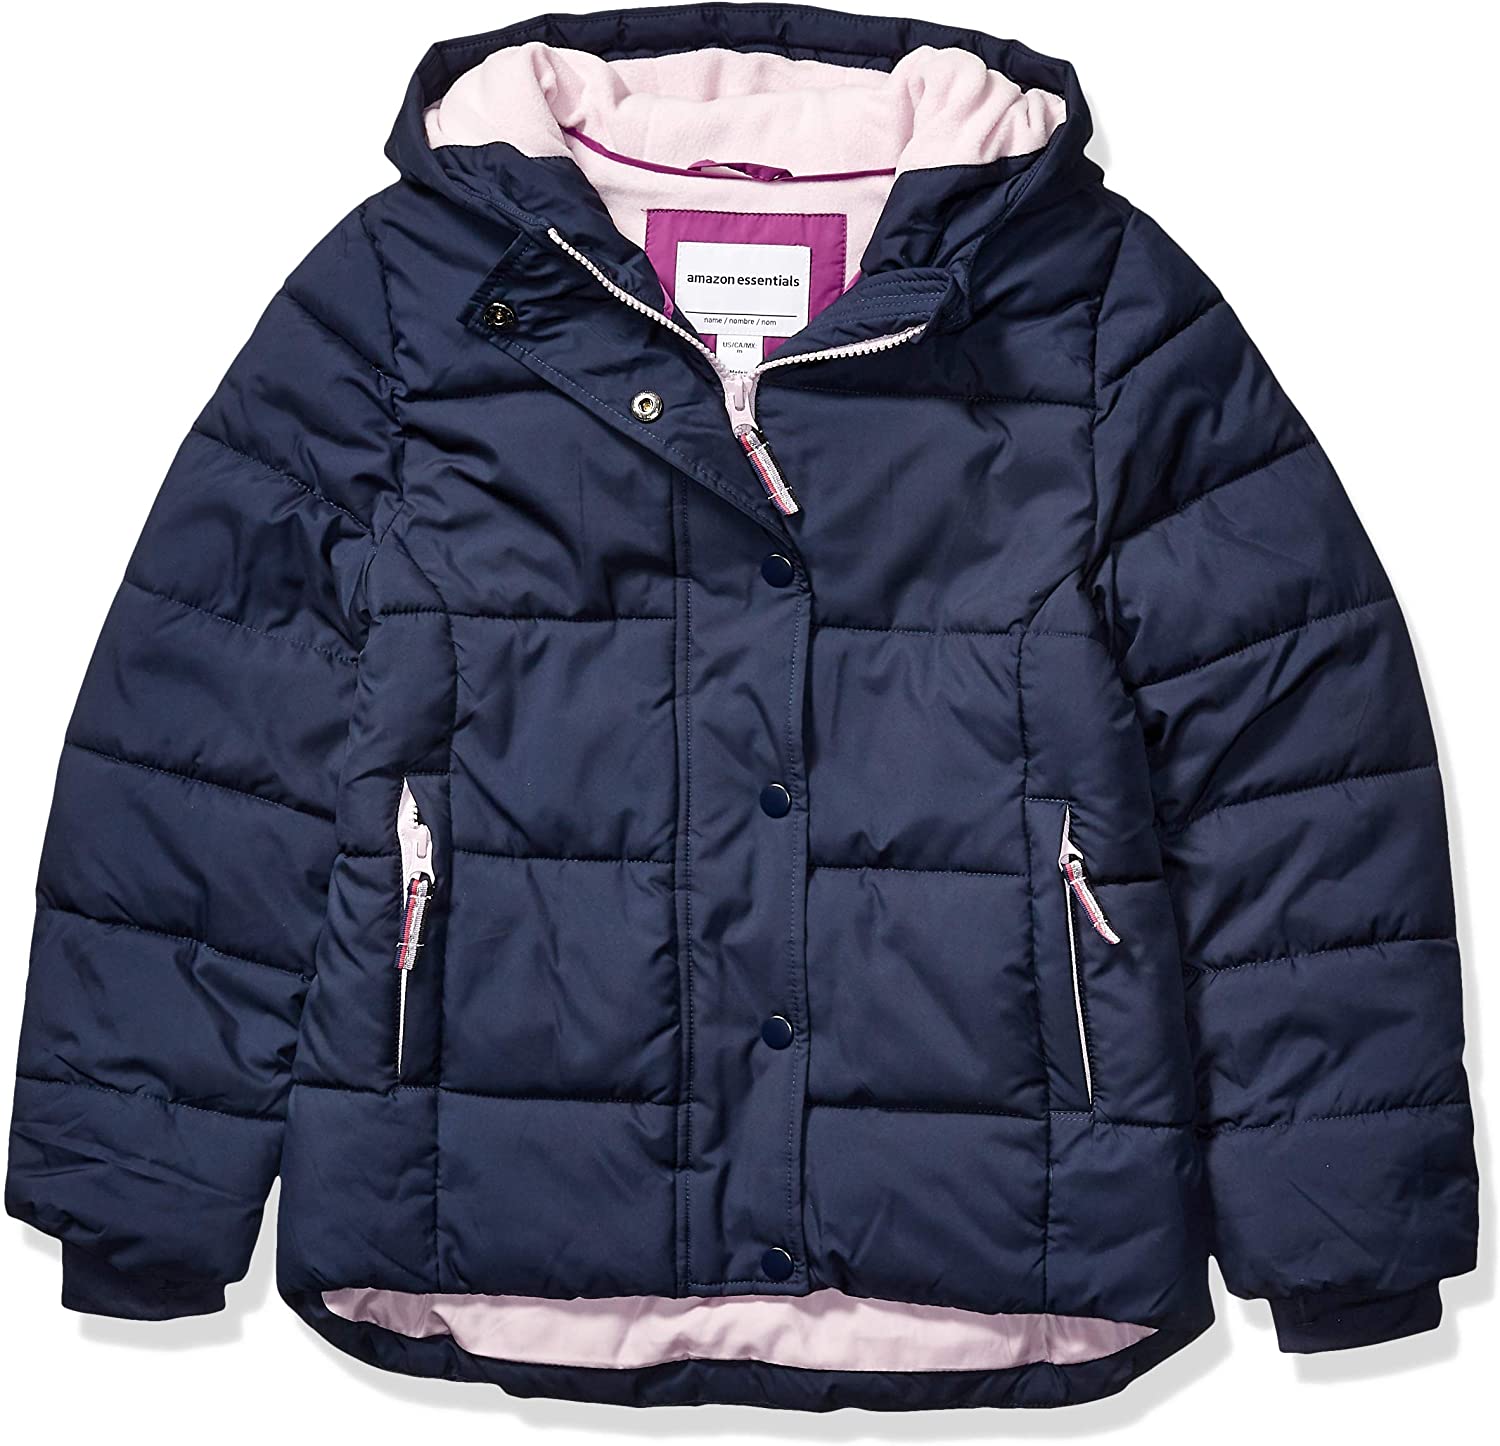 Amazon Essentials Girls' Heavy-Weight Hooded Puffer Jacket